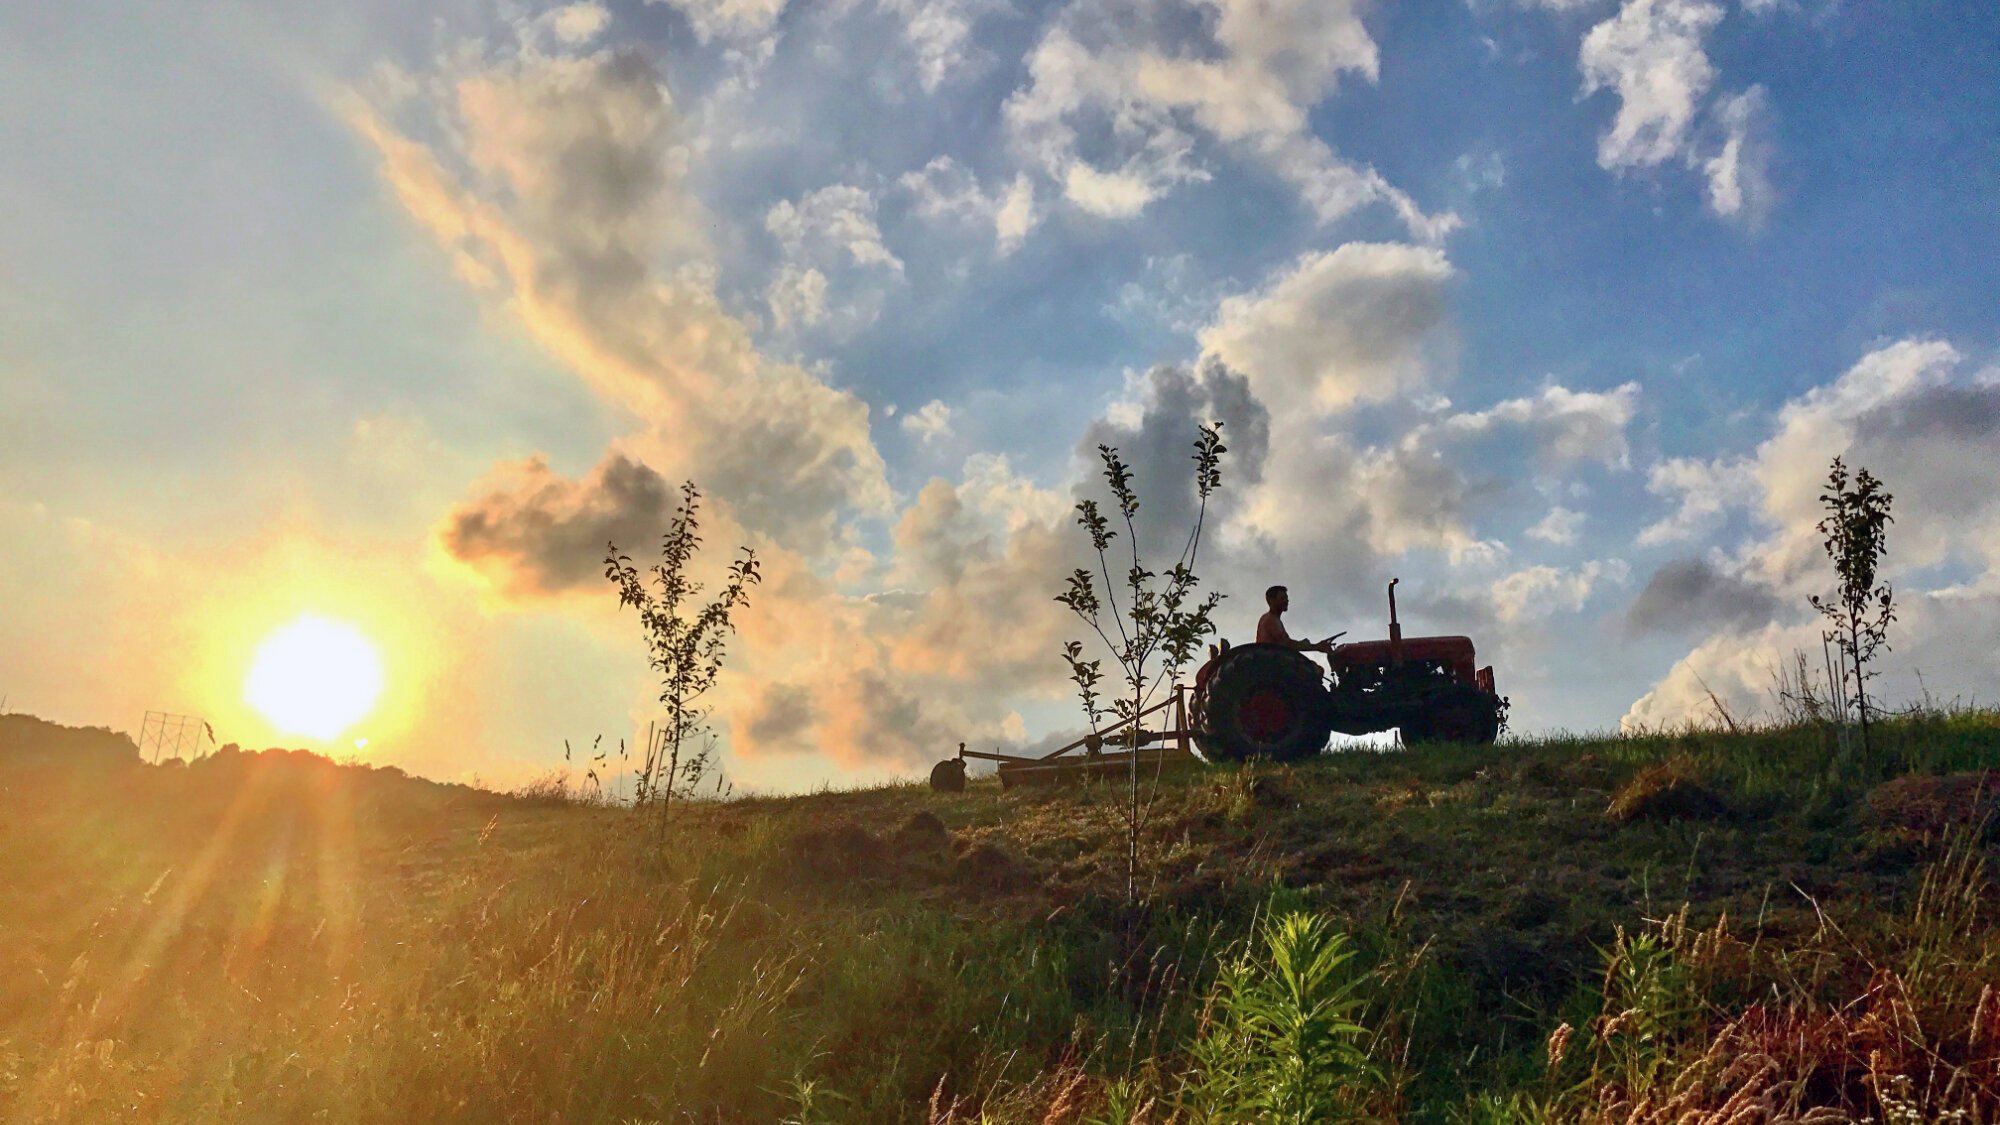 dan+tractor+sunset+16x9.jpg